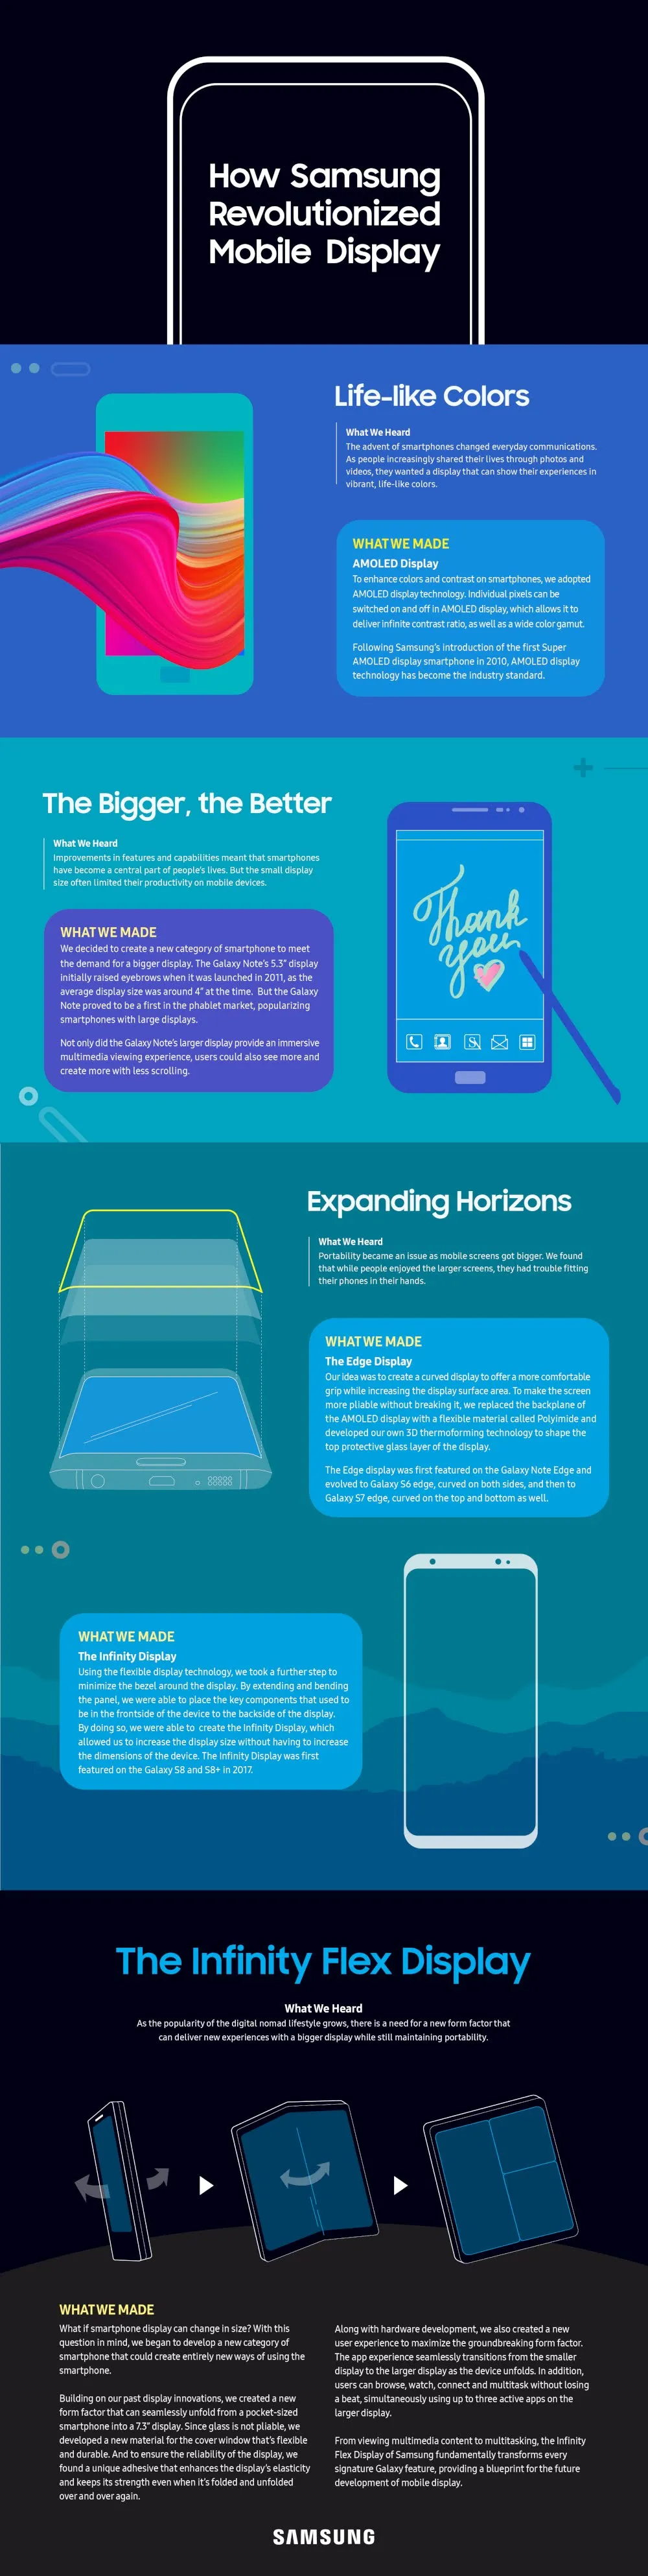 [Infographic] How Samsung Revolutionized Mobile Display